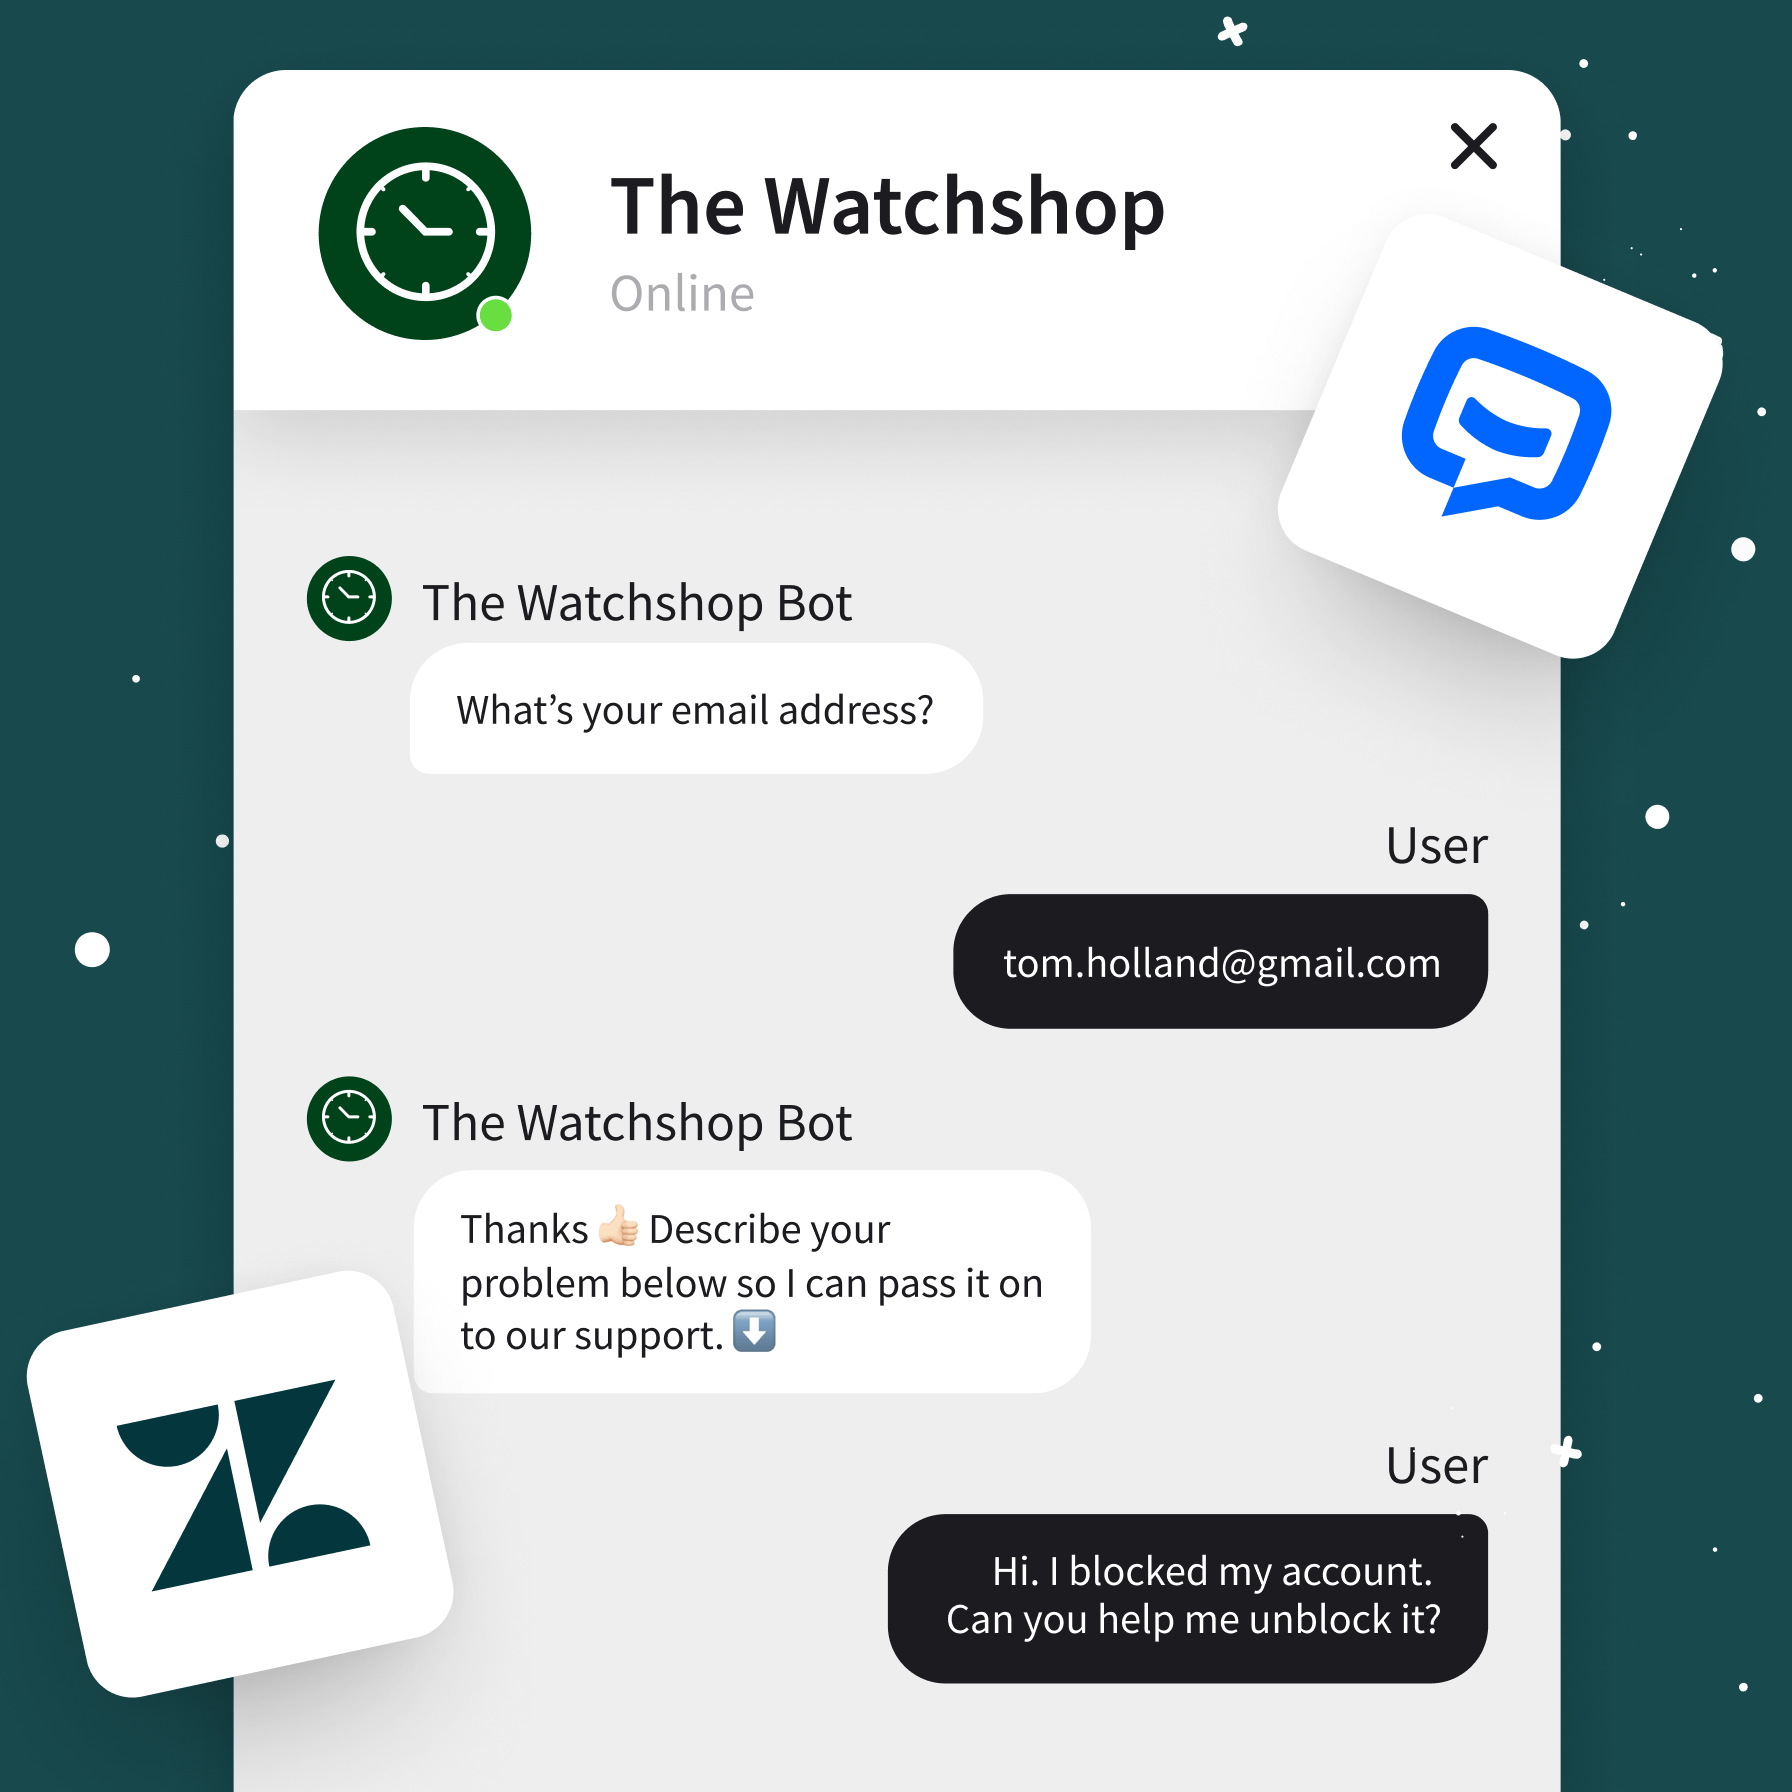 The Zendesk ChatBot integration